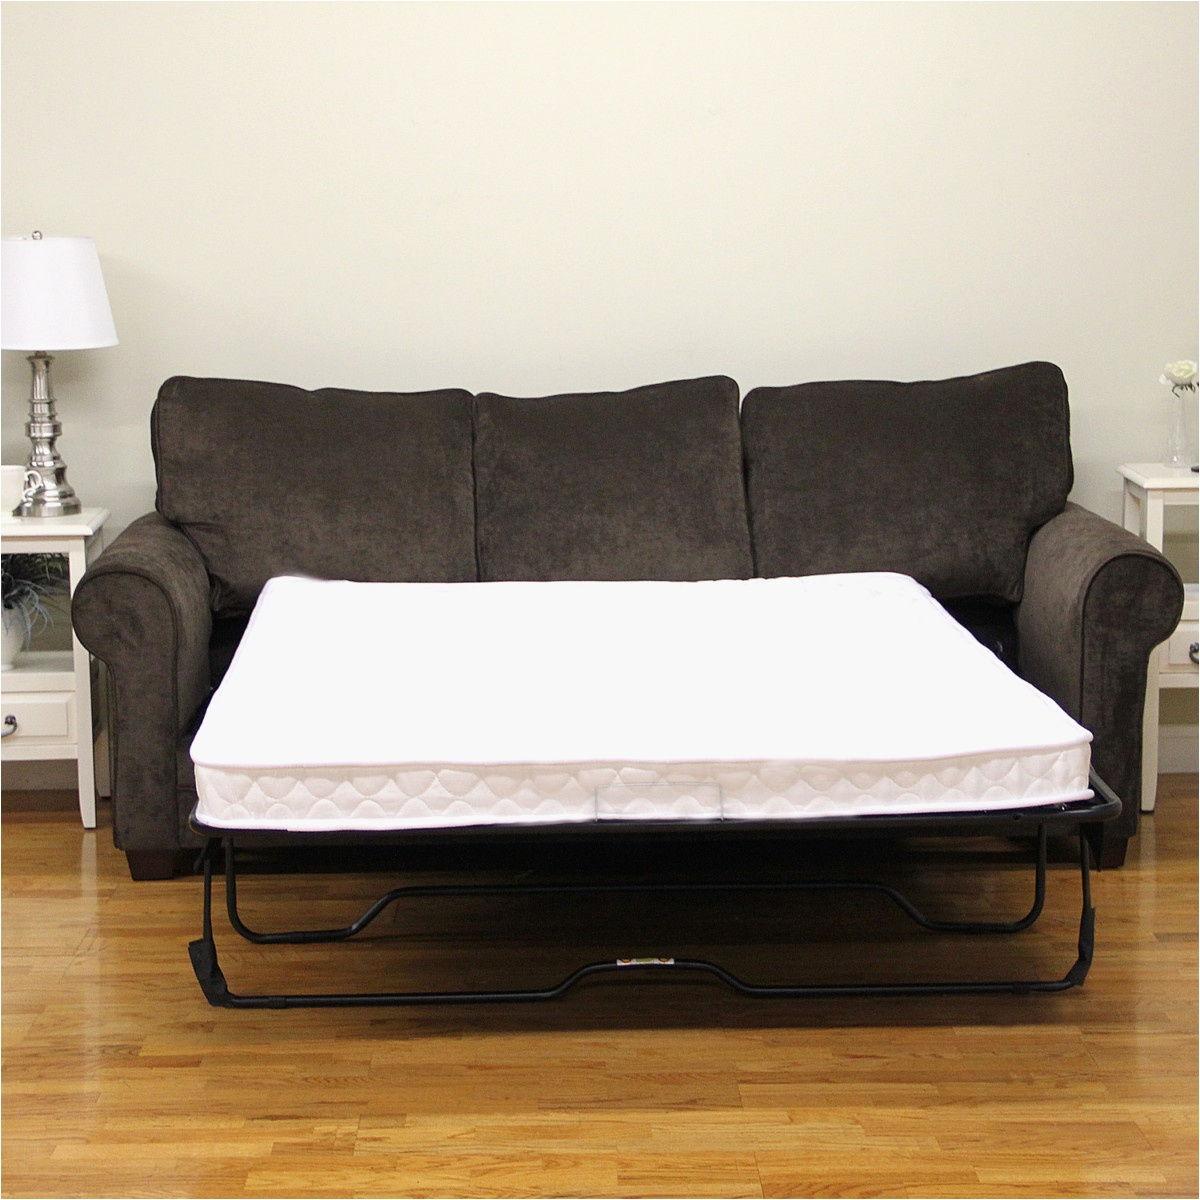 Brilliant Sleeper Sofa Memory Foam Mattress Review Best inside measurements 1200 X 1200